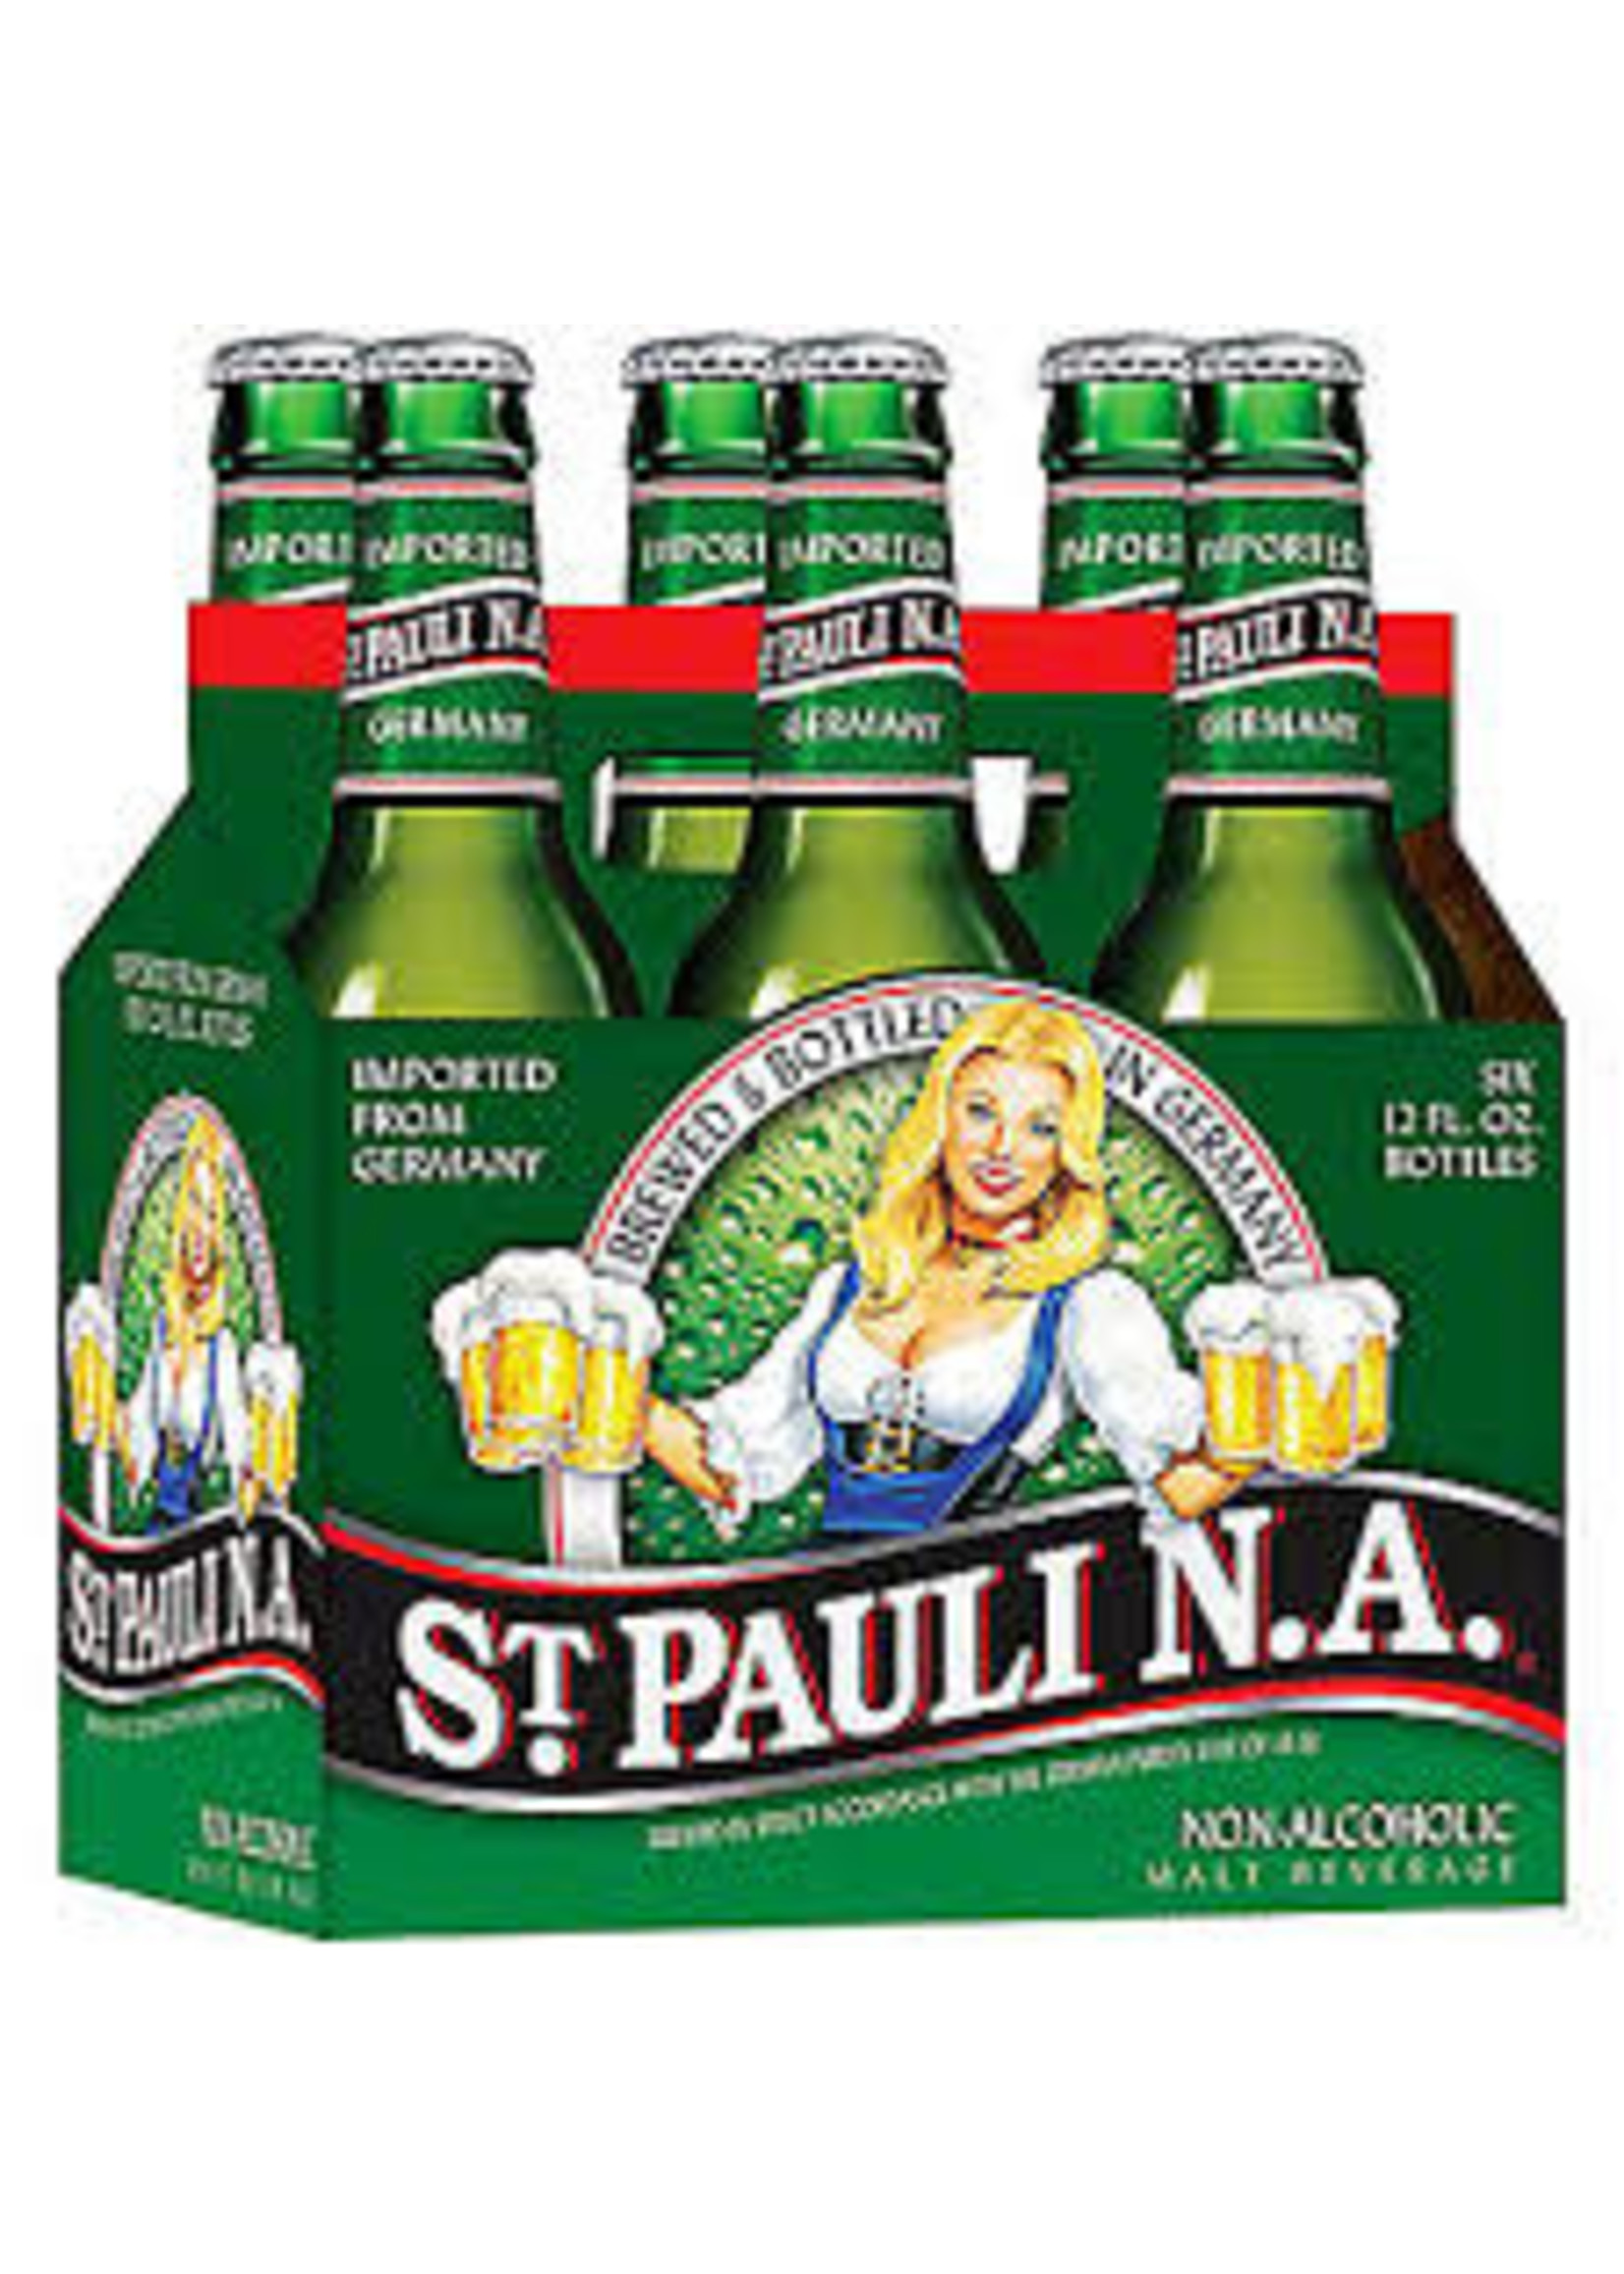 ST. PAULI GIRL ST. PAULI GIRL	NON ALCOHOLIC 6PK	12 OZ